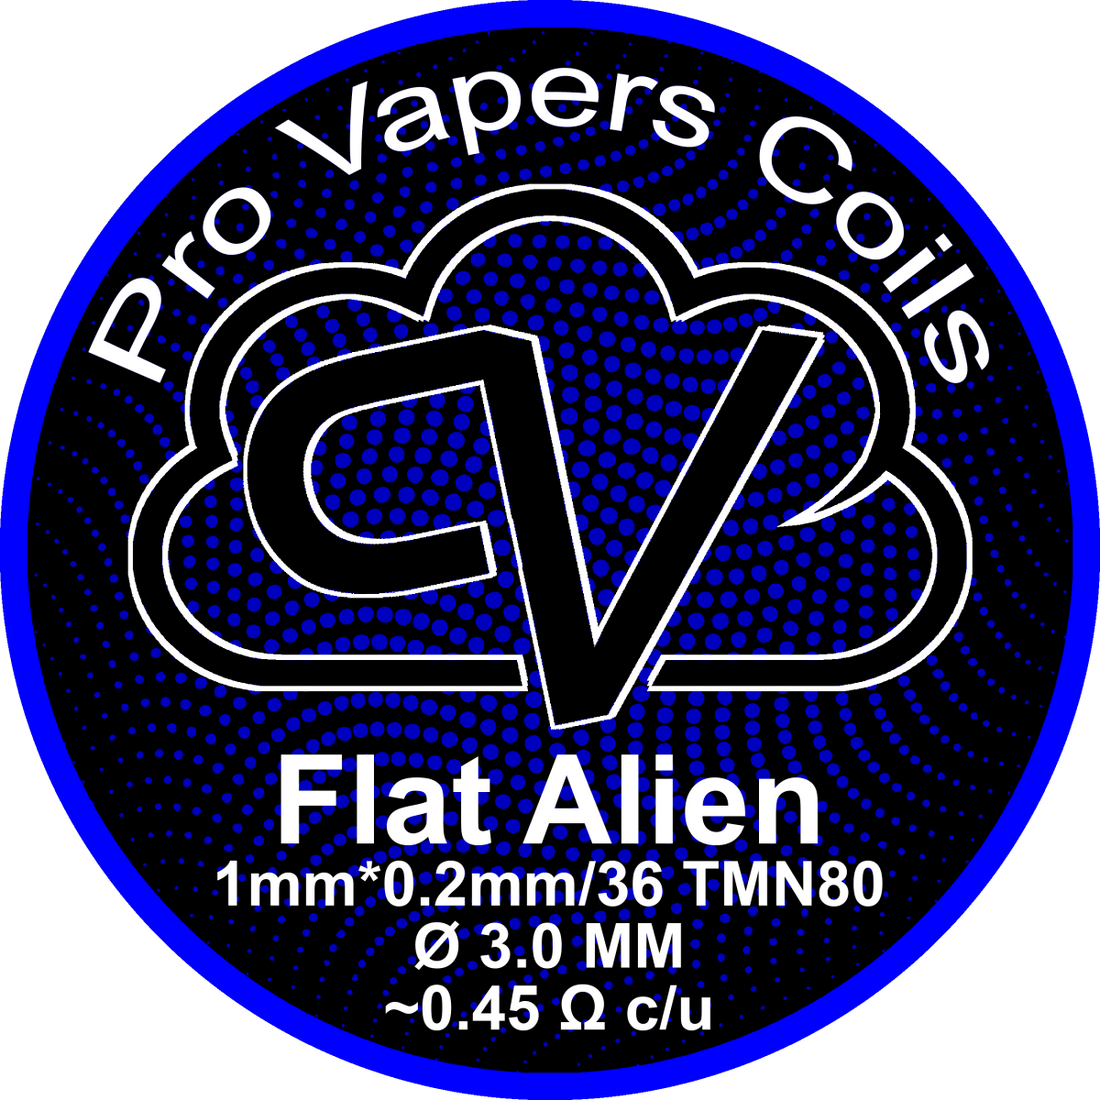 Flat Alien - Resistencias Artesanales - Pro Vapers | RA-PVC-FA-01